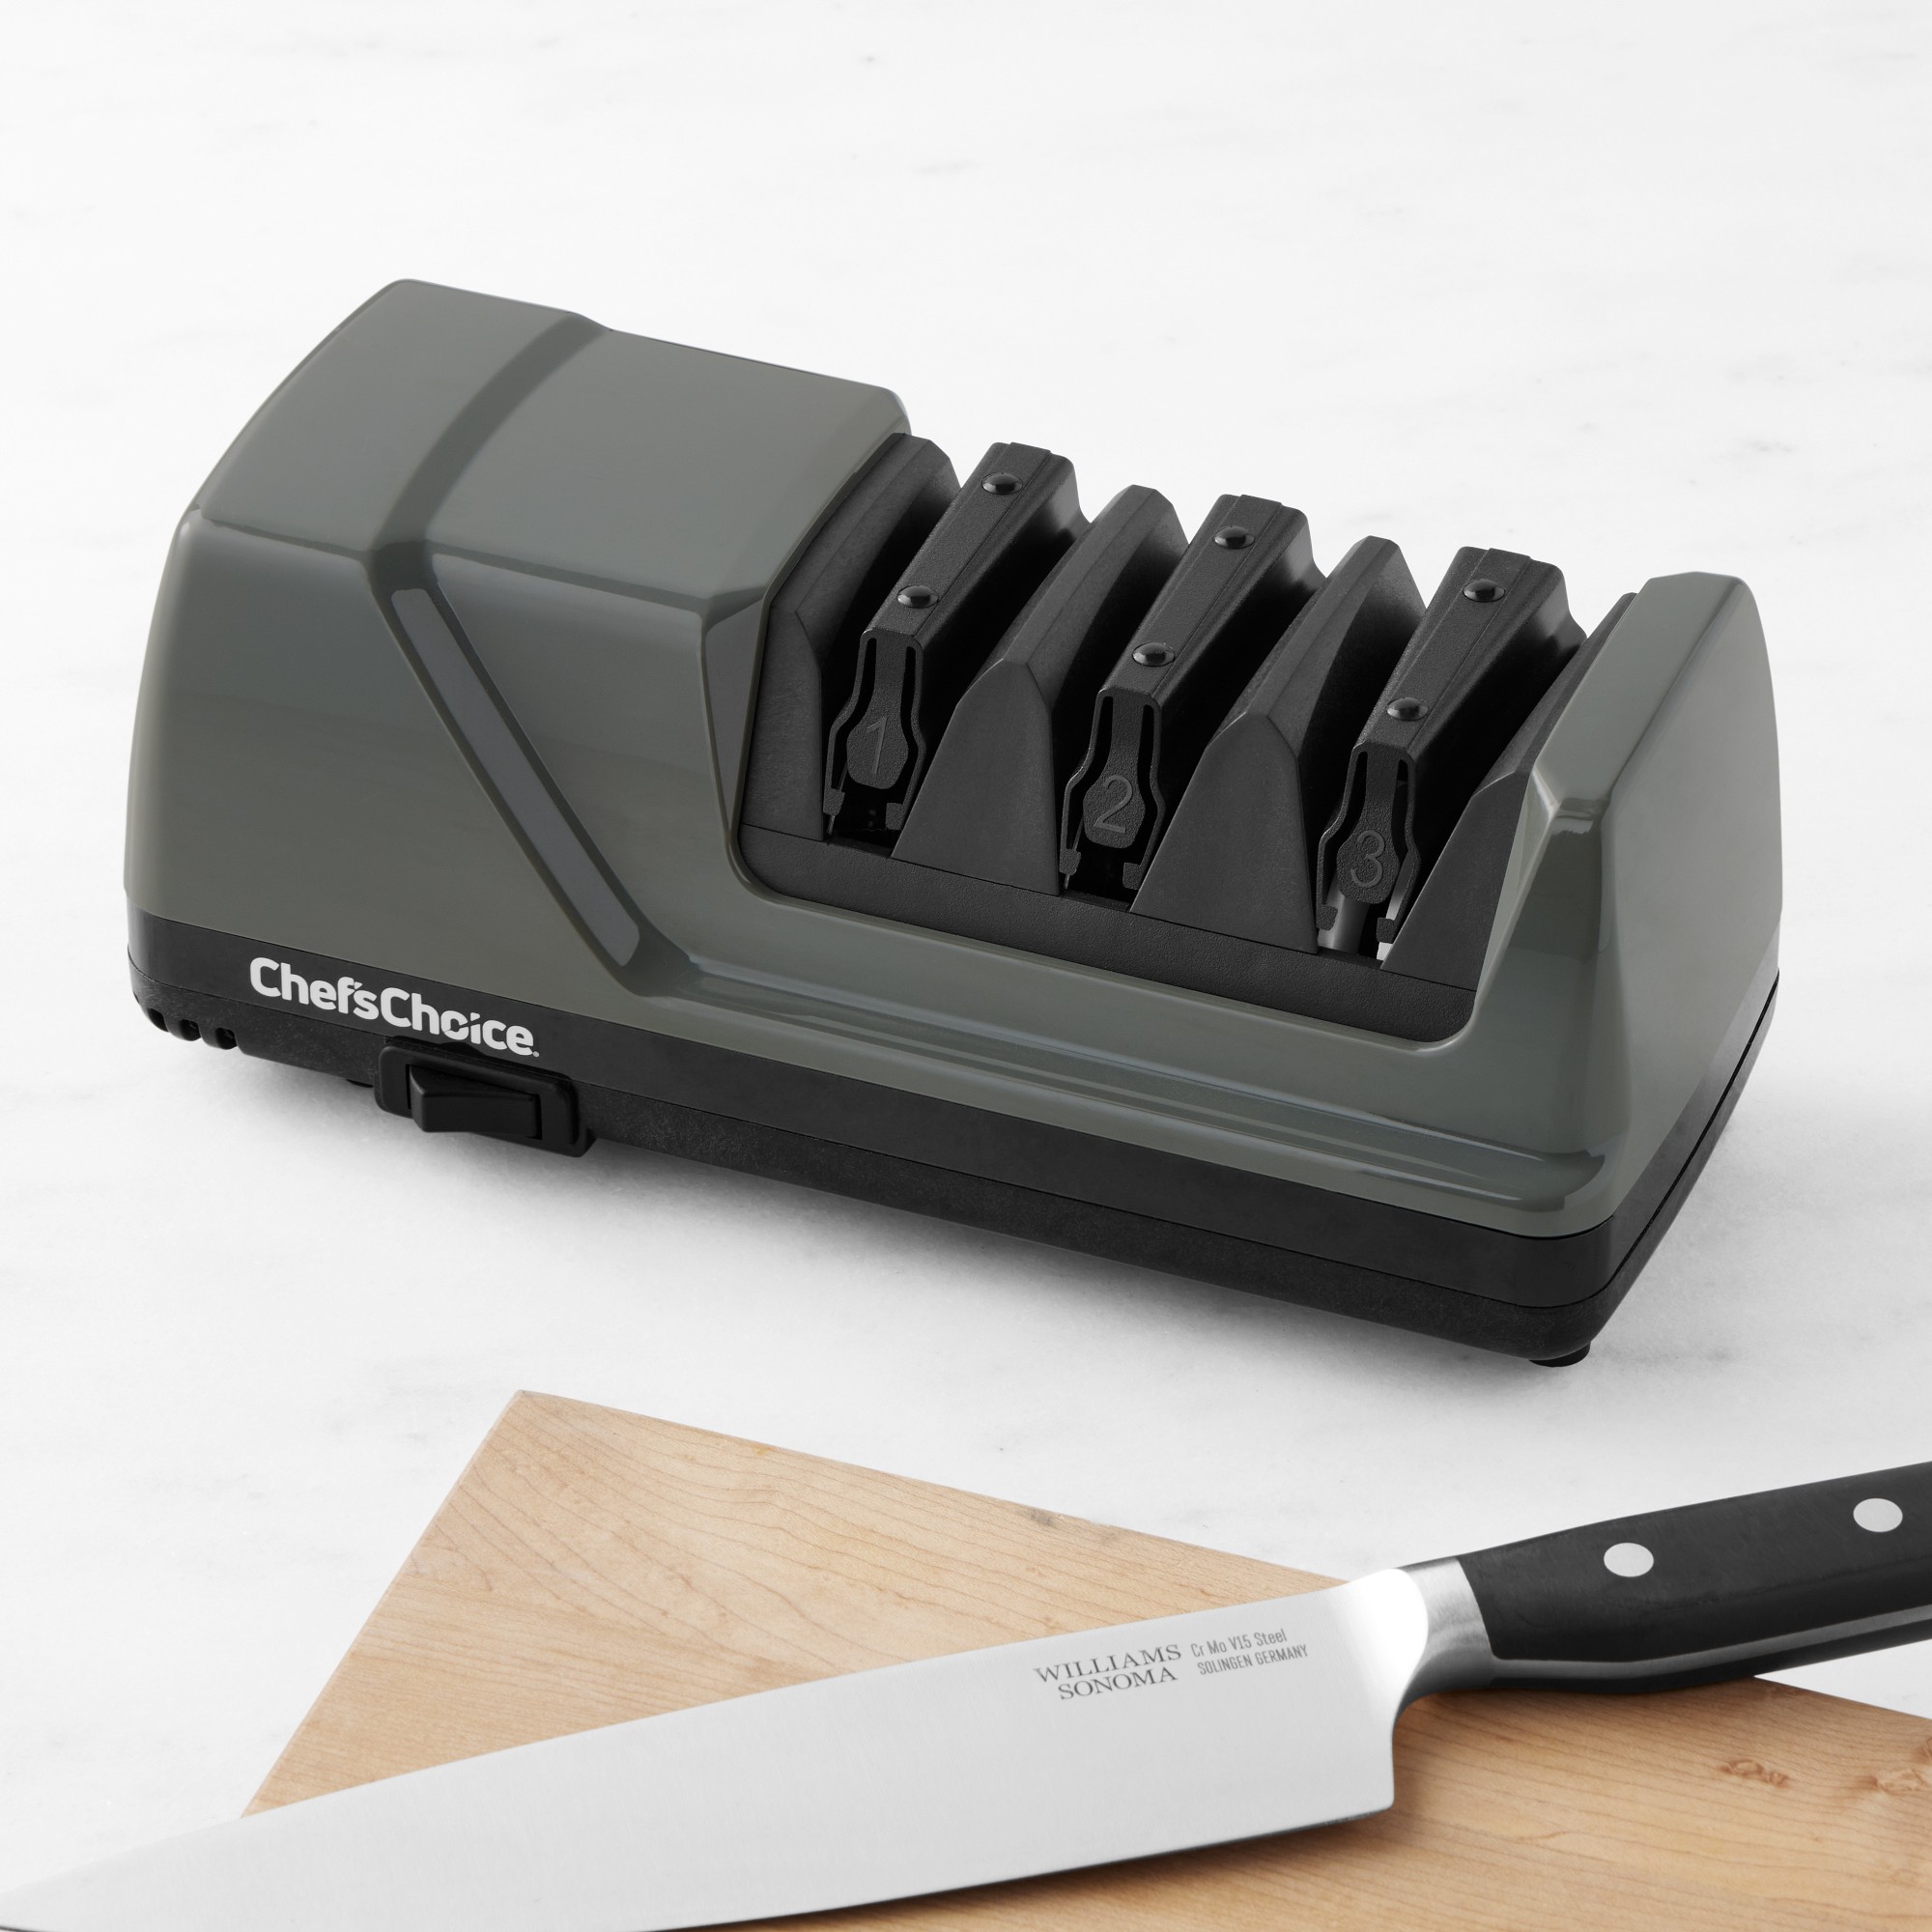 Chef'sChoice Ultimate Trizor Edge XIV Knife Sharpener